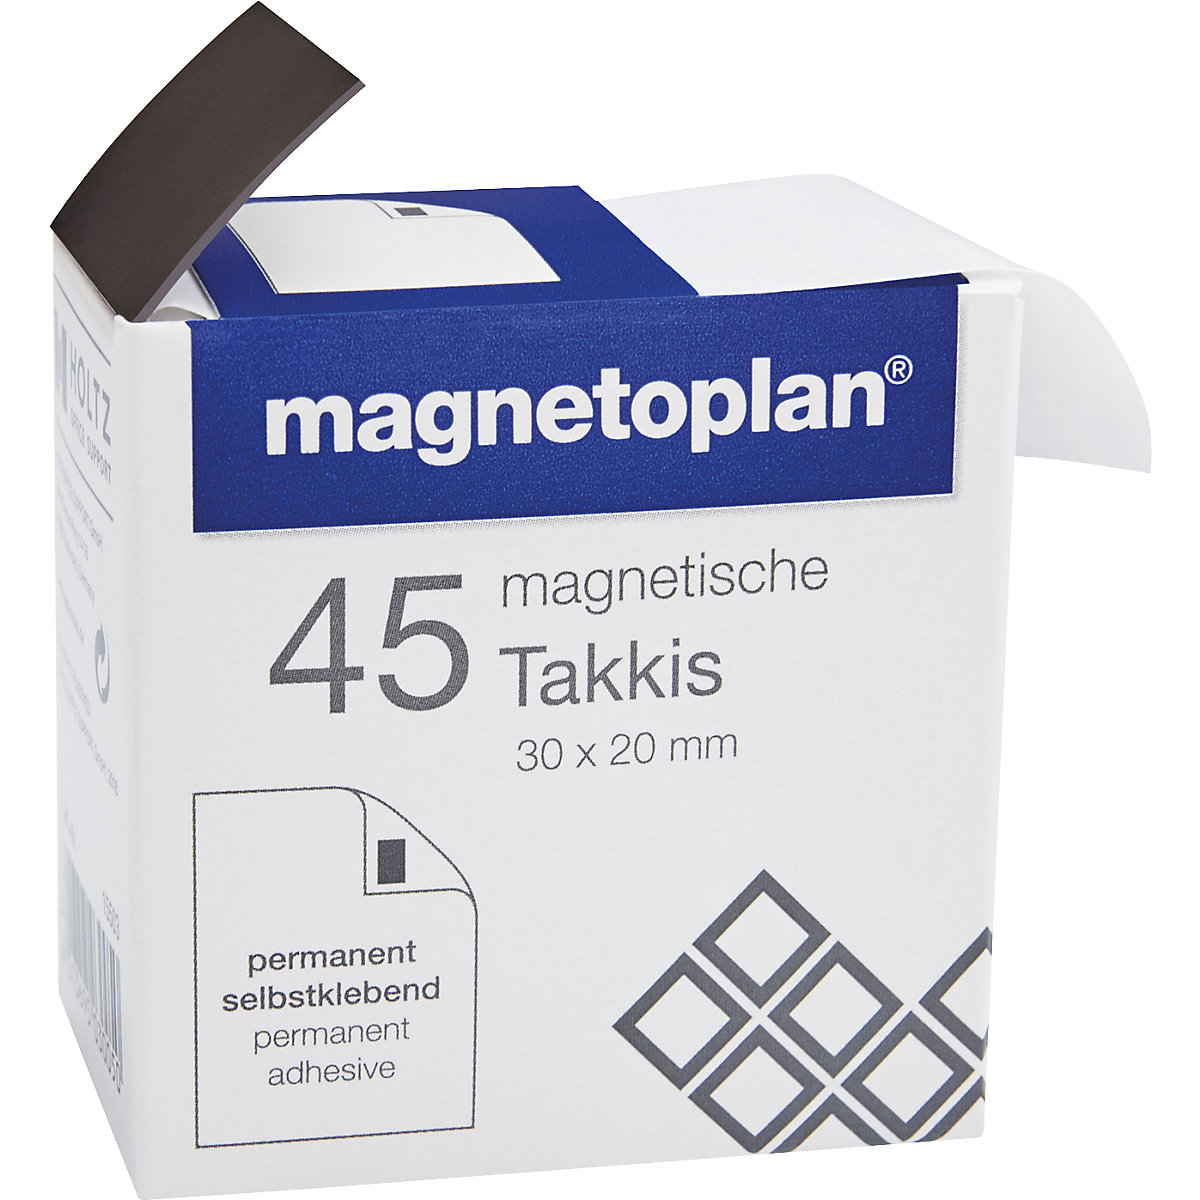 Angoli adesivi magnetici – magnetoplan: lungh. x largh. 30 x 20 mm, nel  dispenser